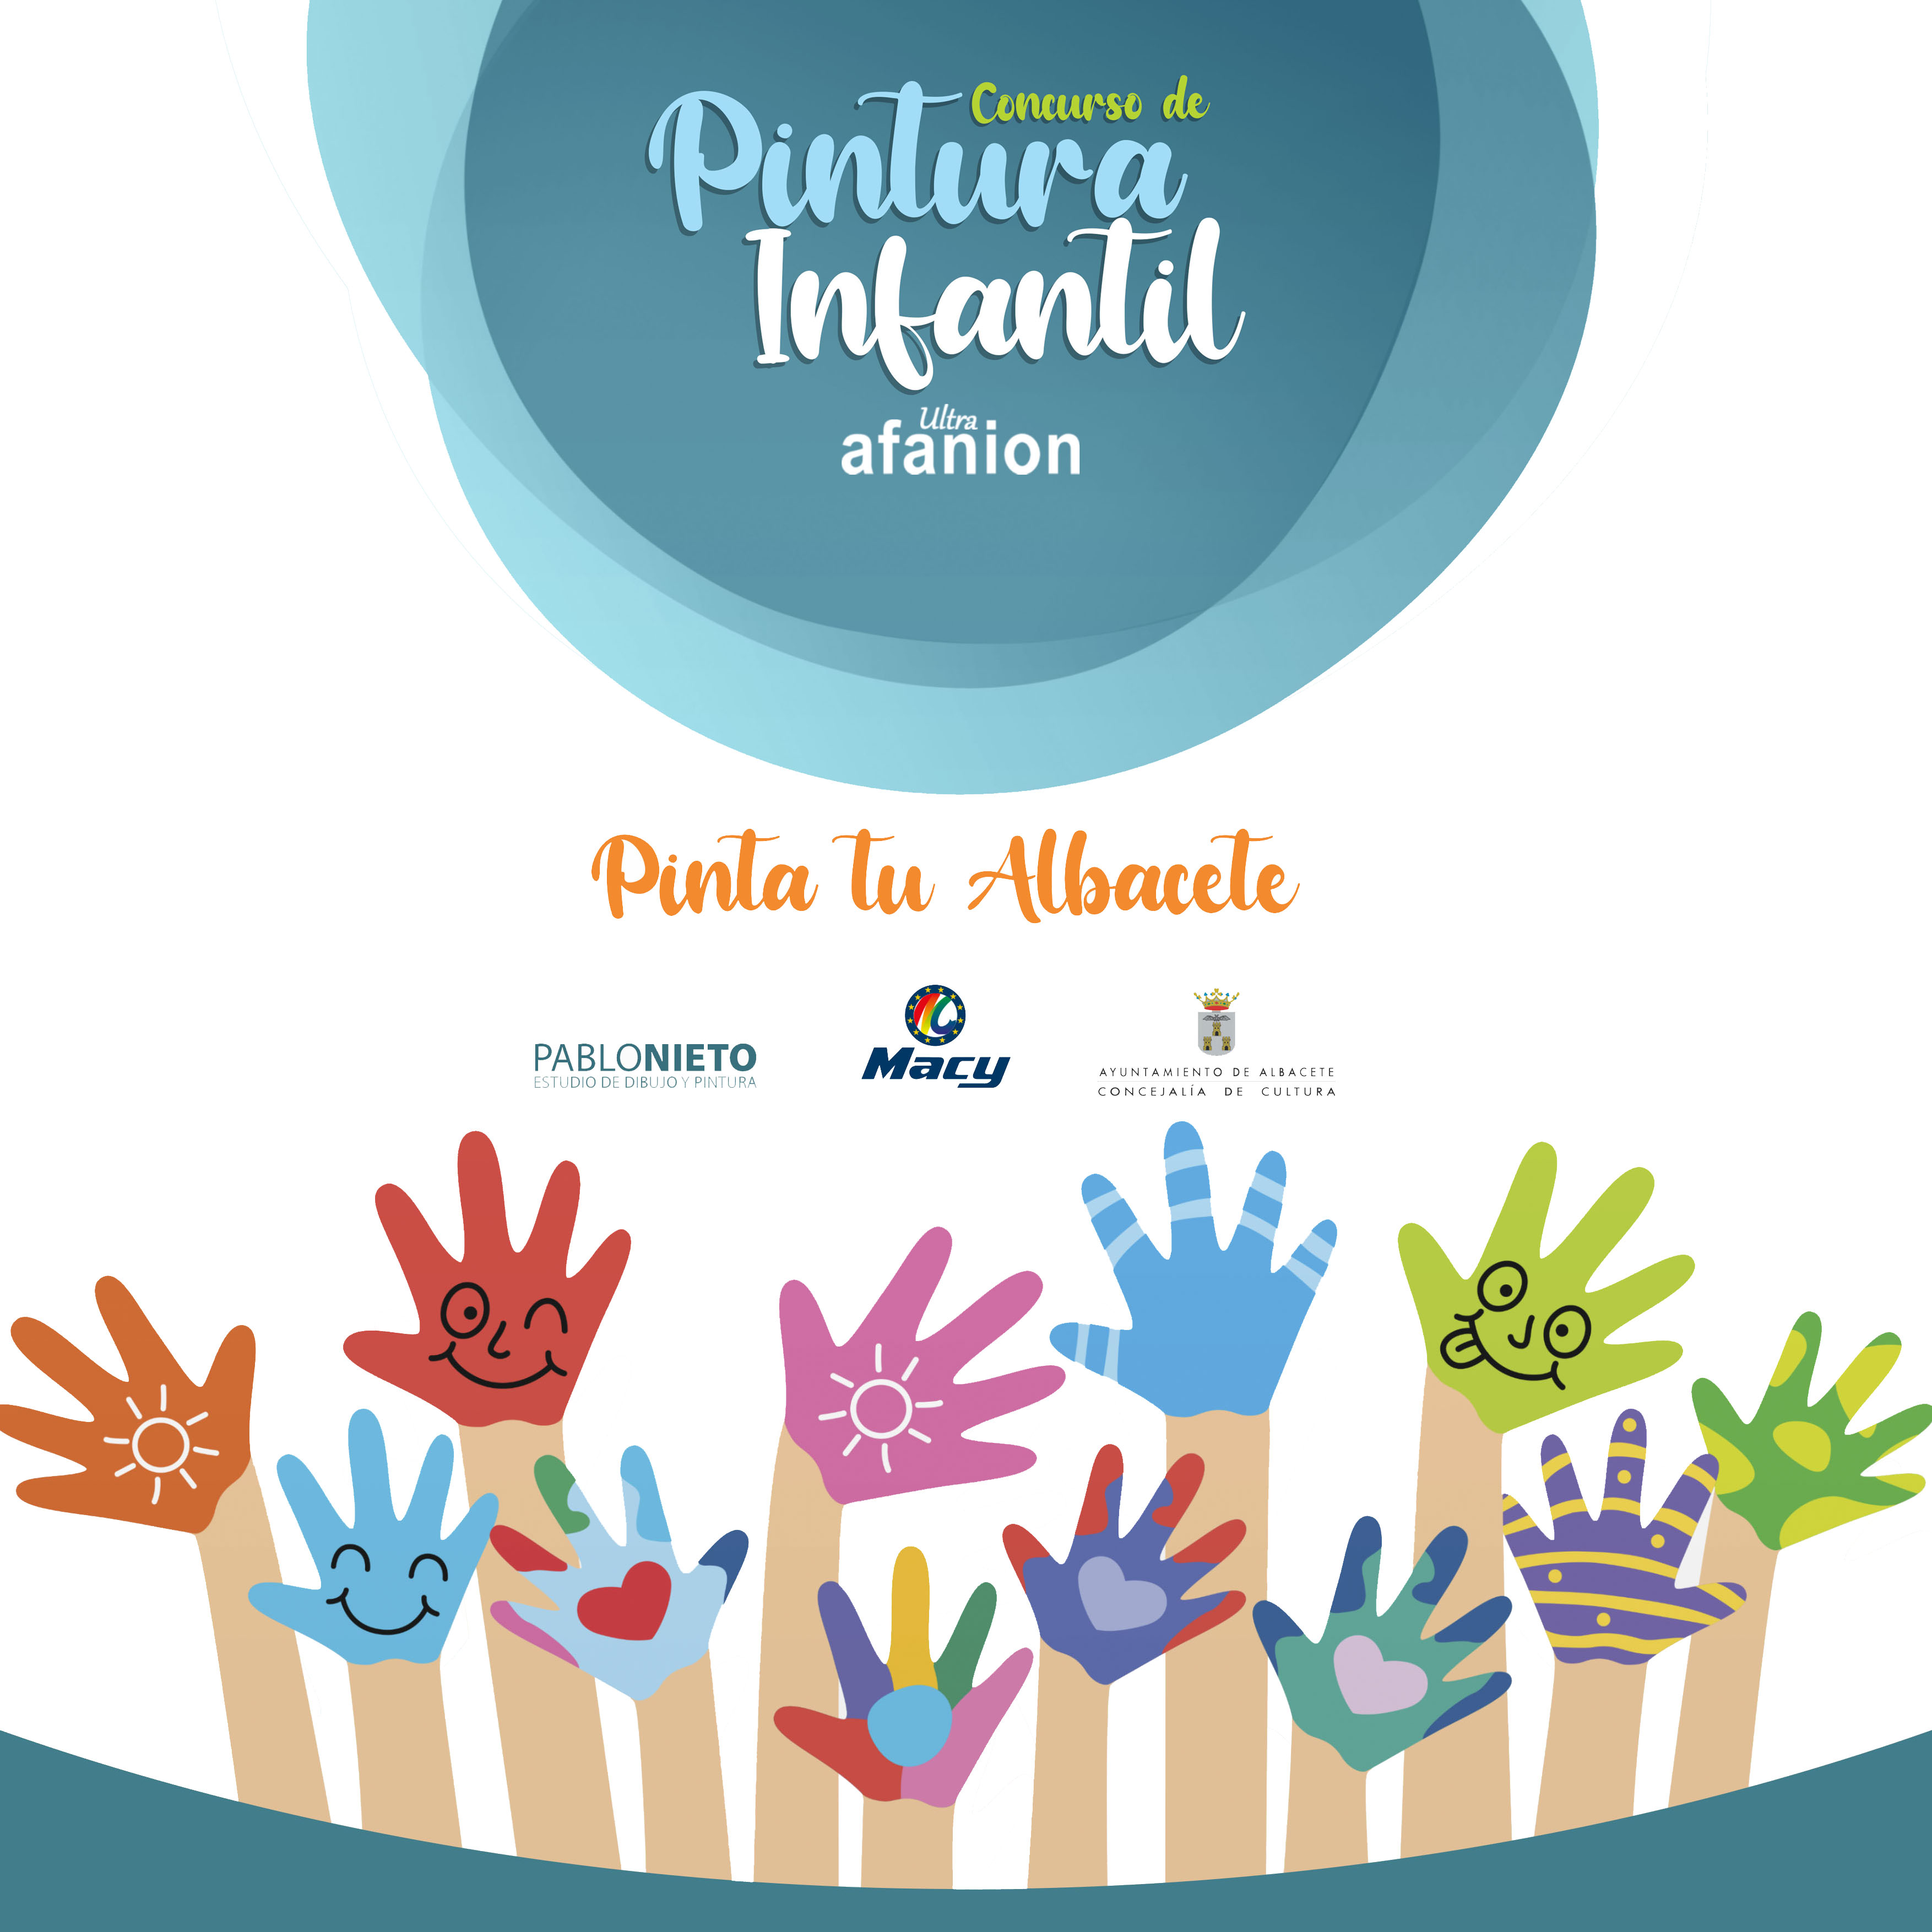 I Concurso de Pintura Infantil Ultra Afanion Pinta tu Albacete